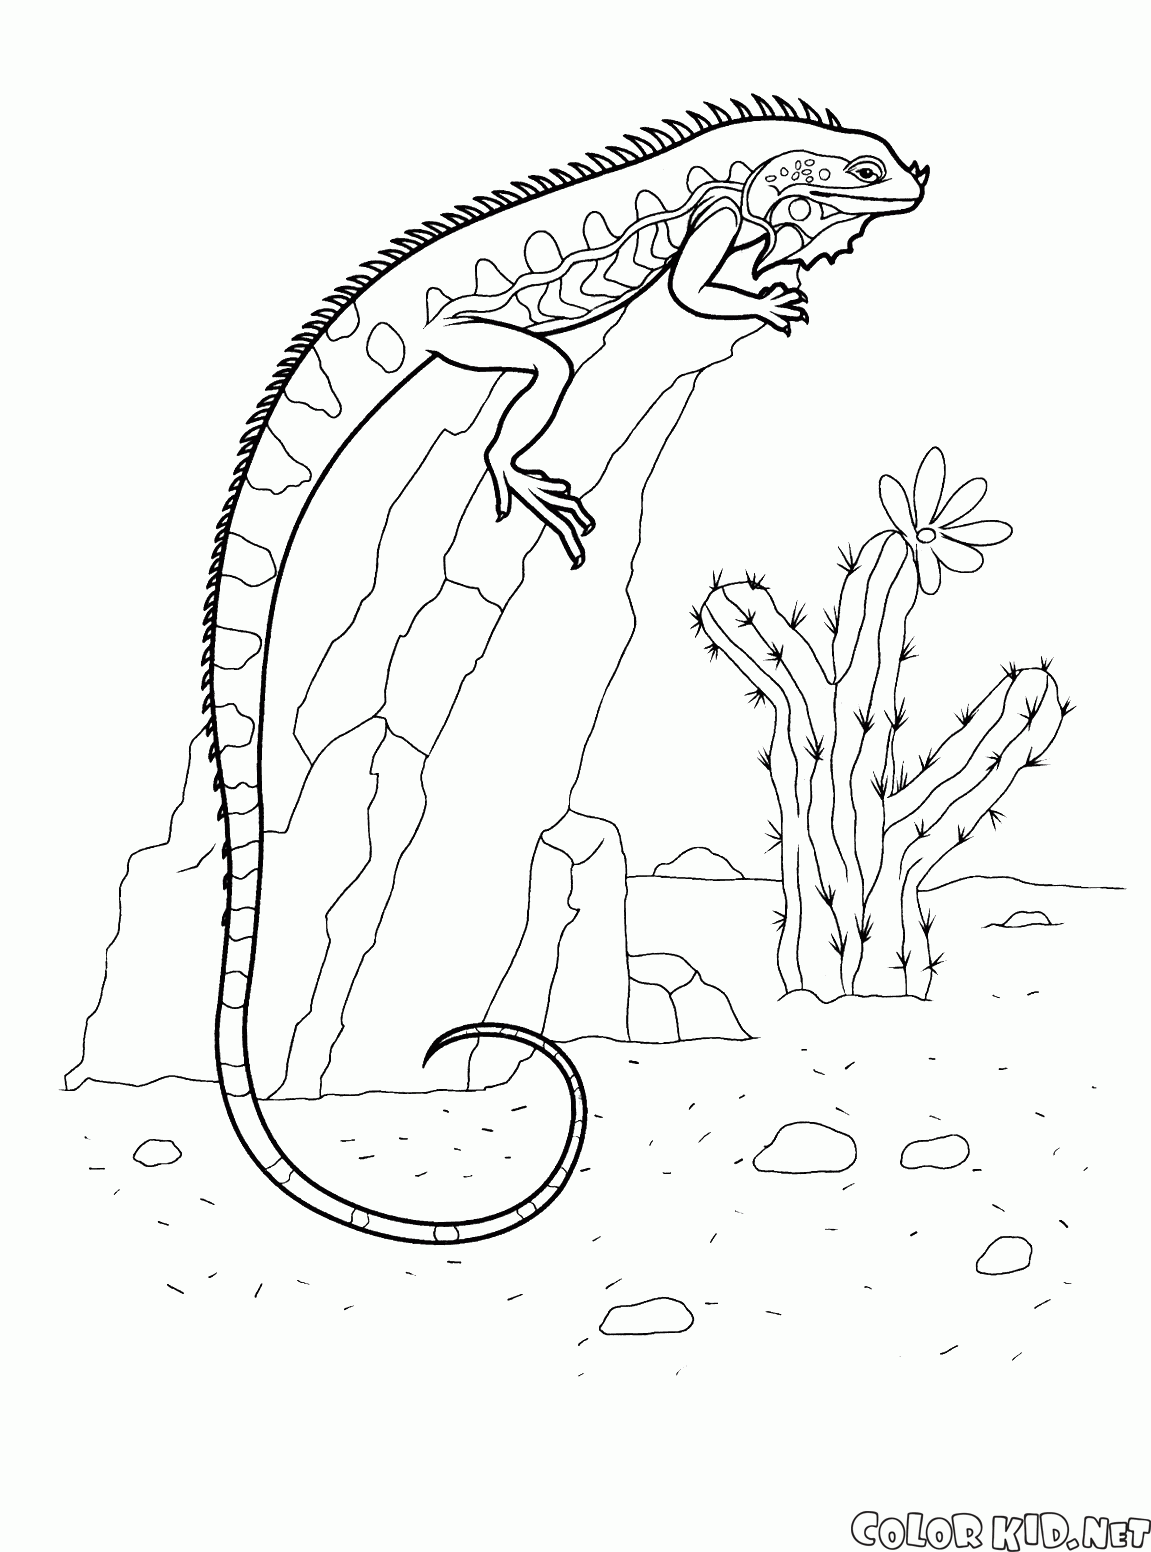 Iguana en una roca